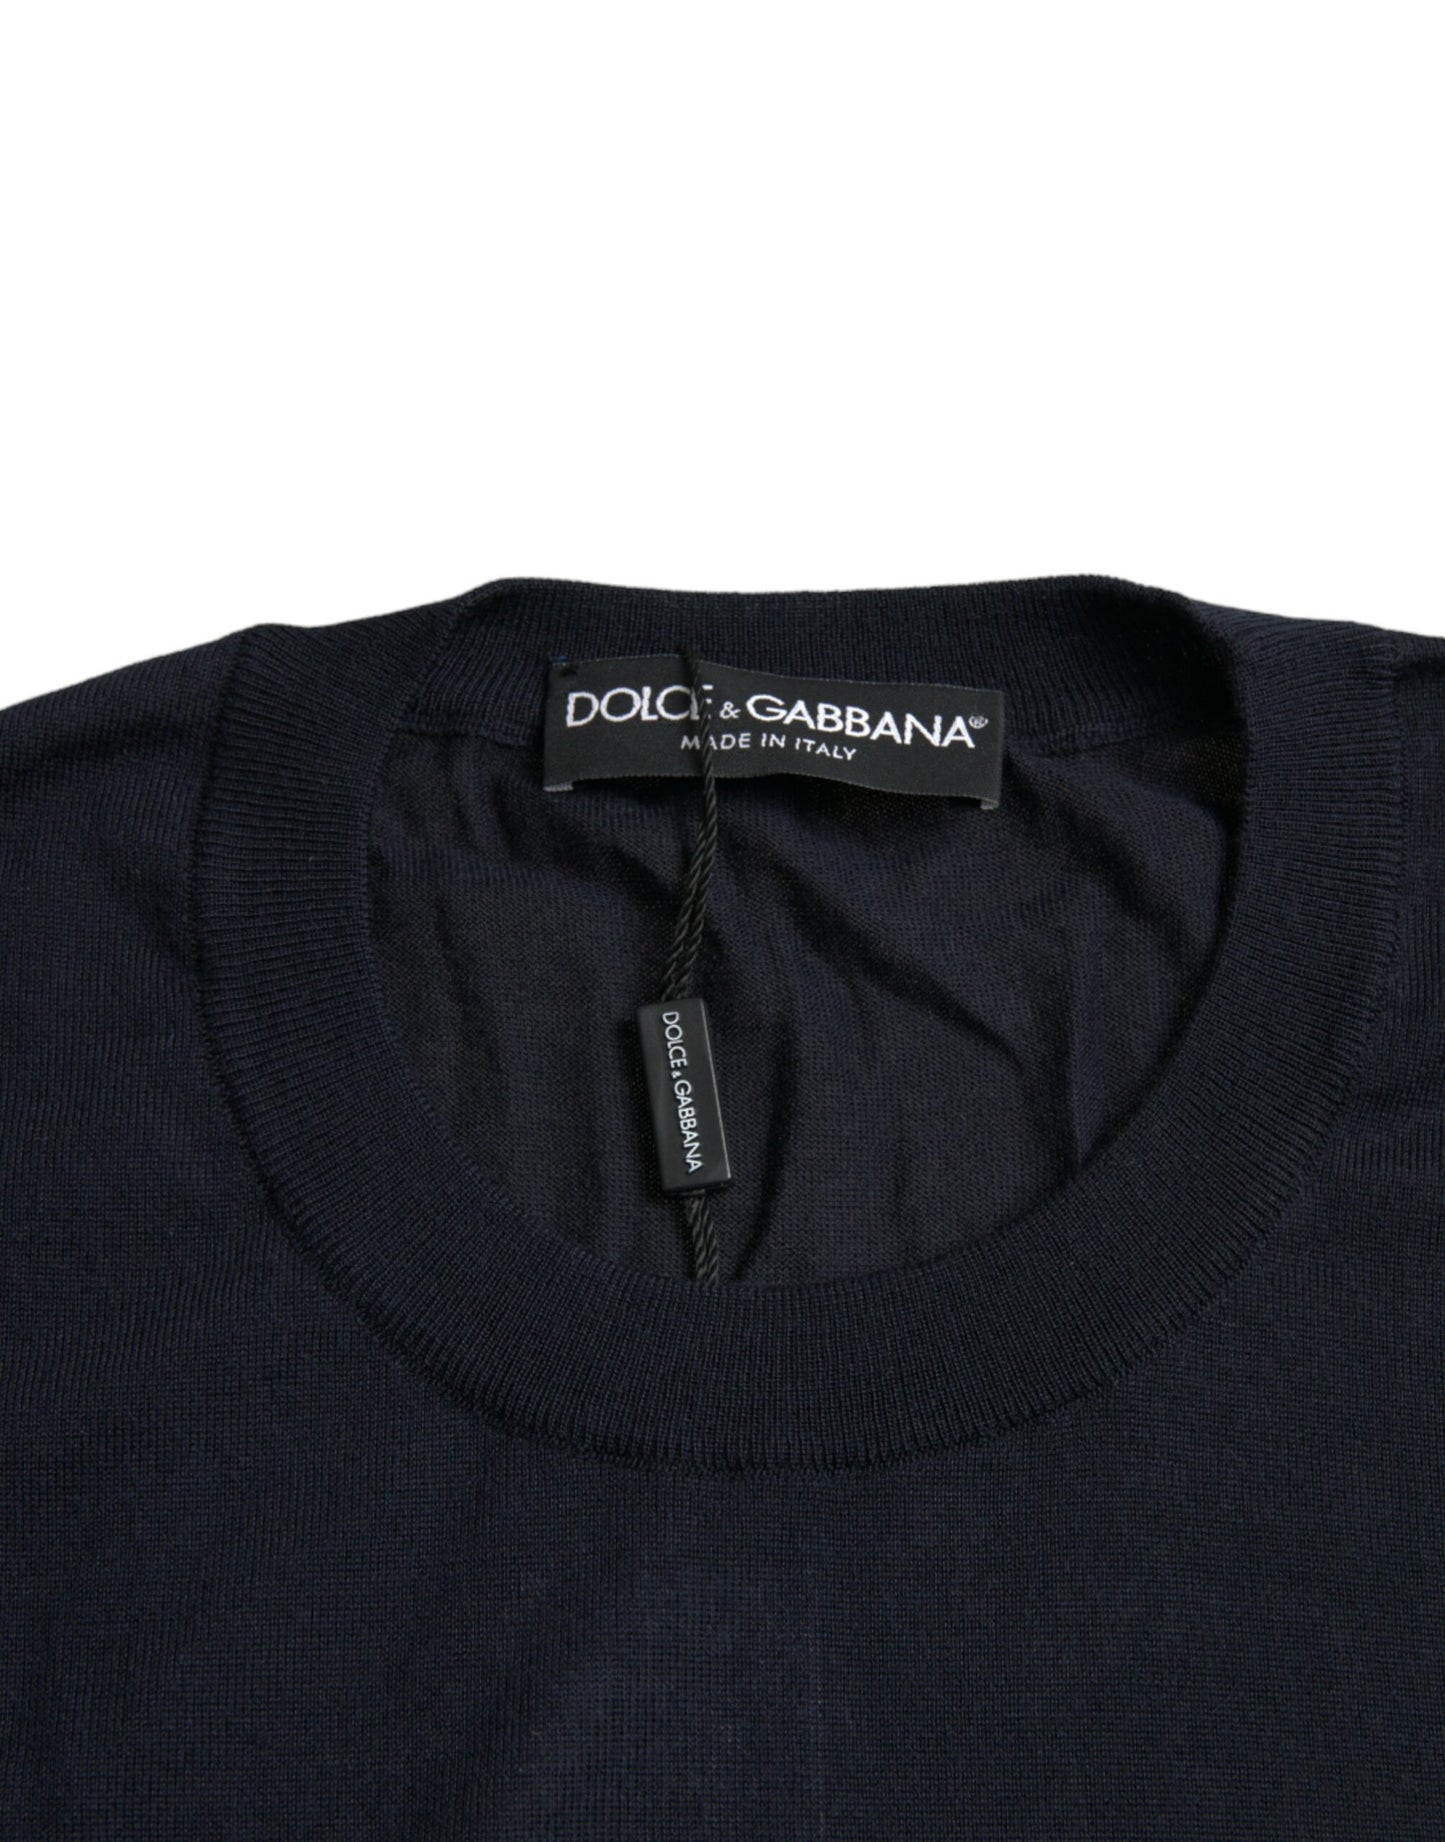 Dolce & Gabbana Blue Bee Cashmere Crewneck Pullover Sweater